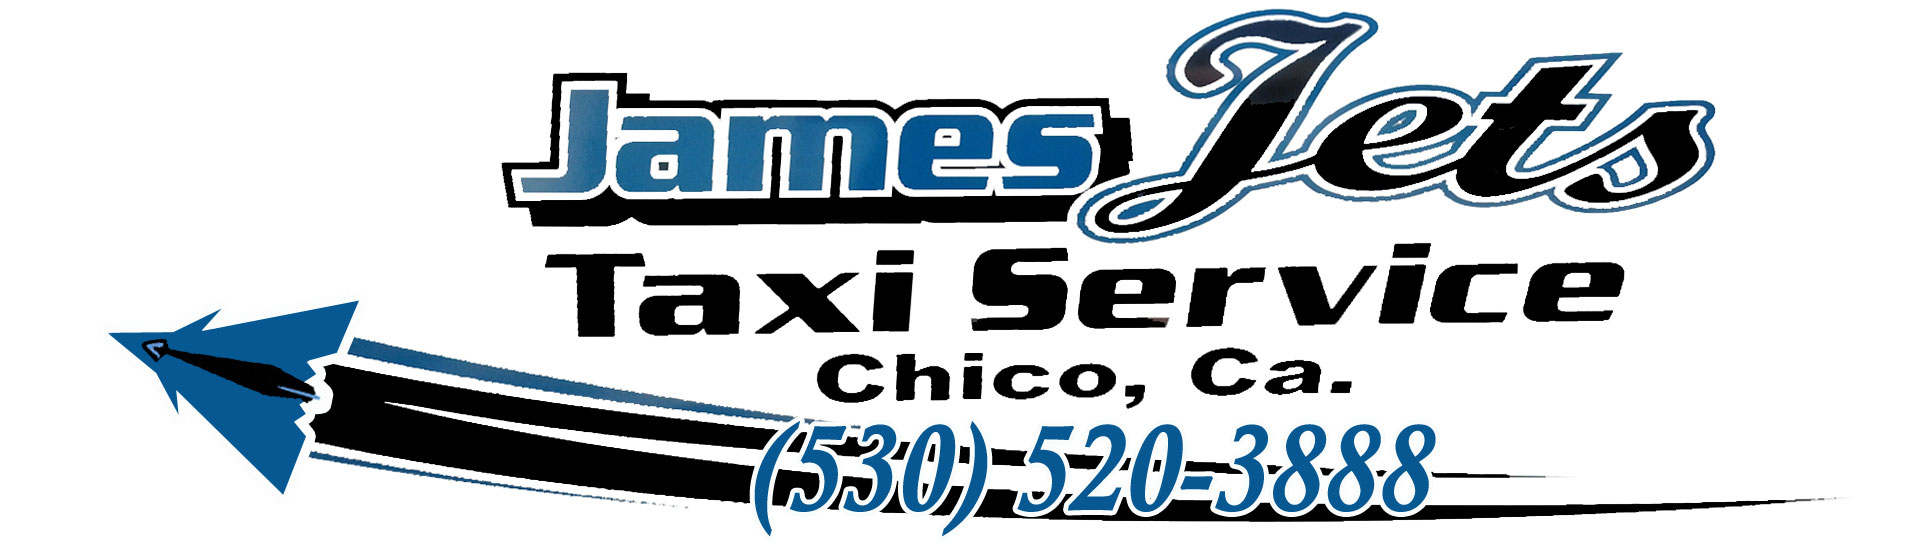 James Evans Taxi Service